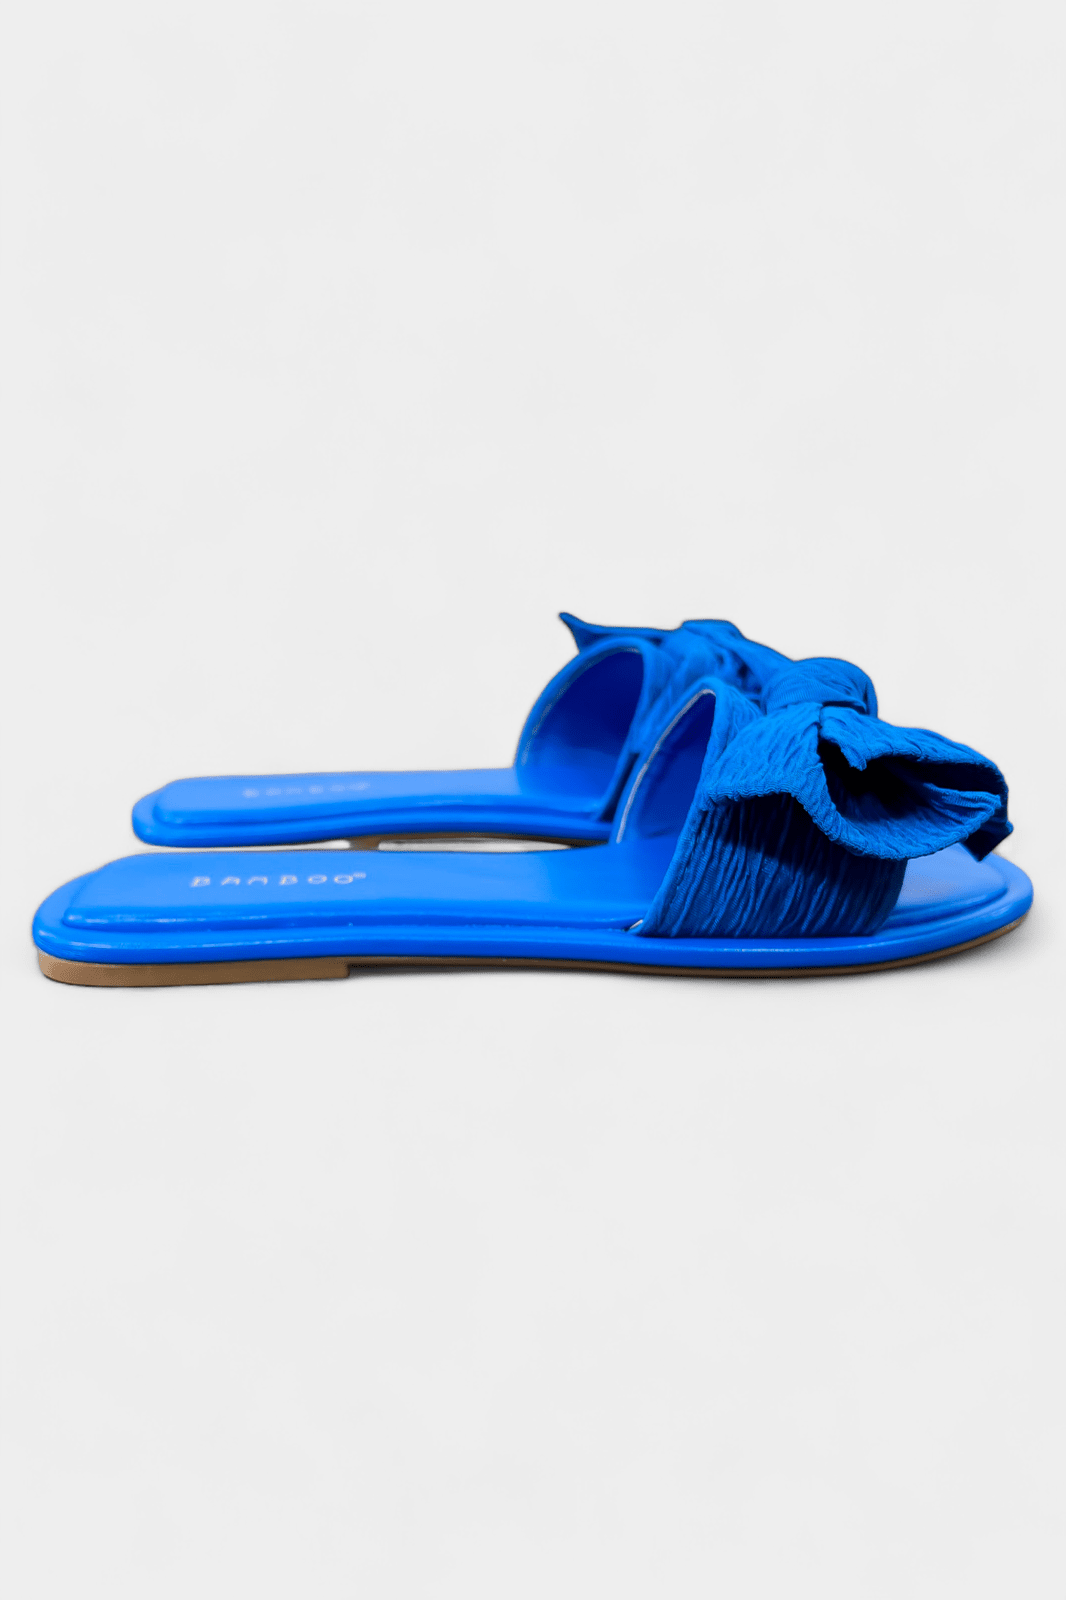 Blue Bow Flat Sandals